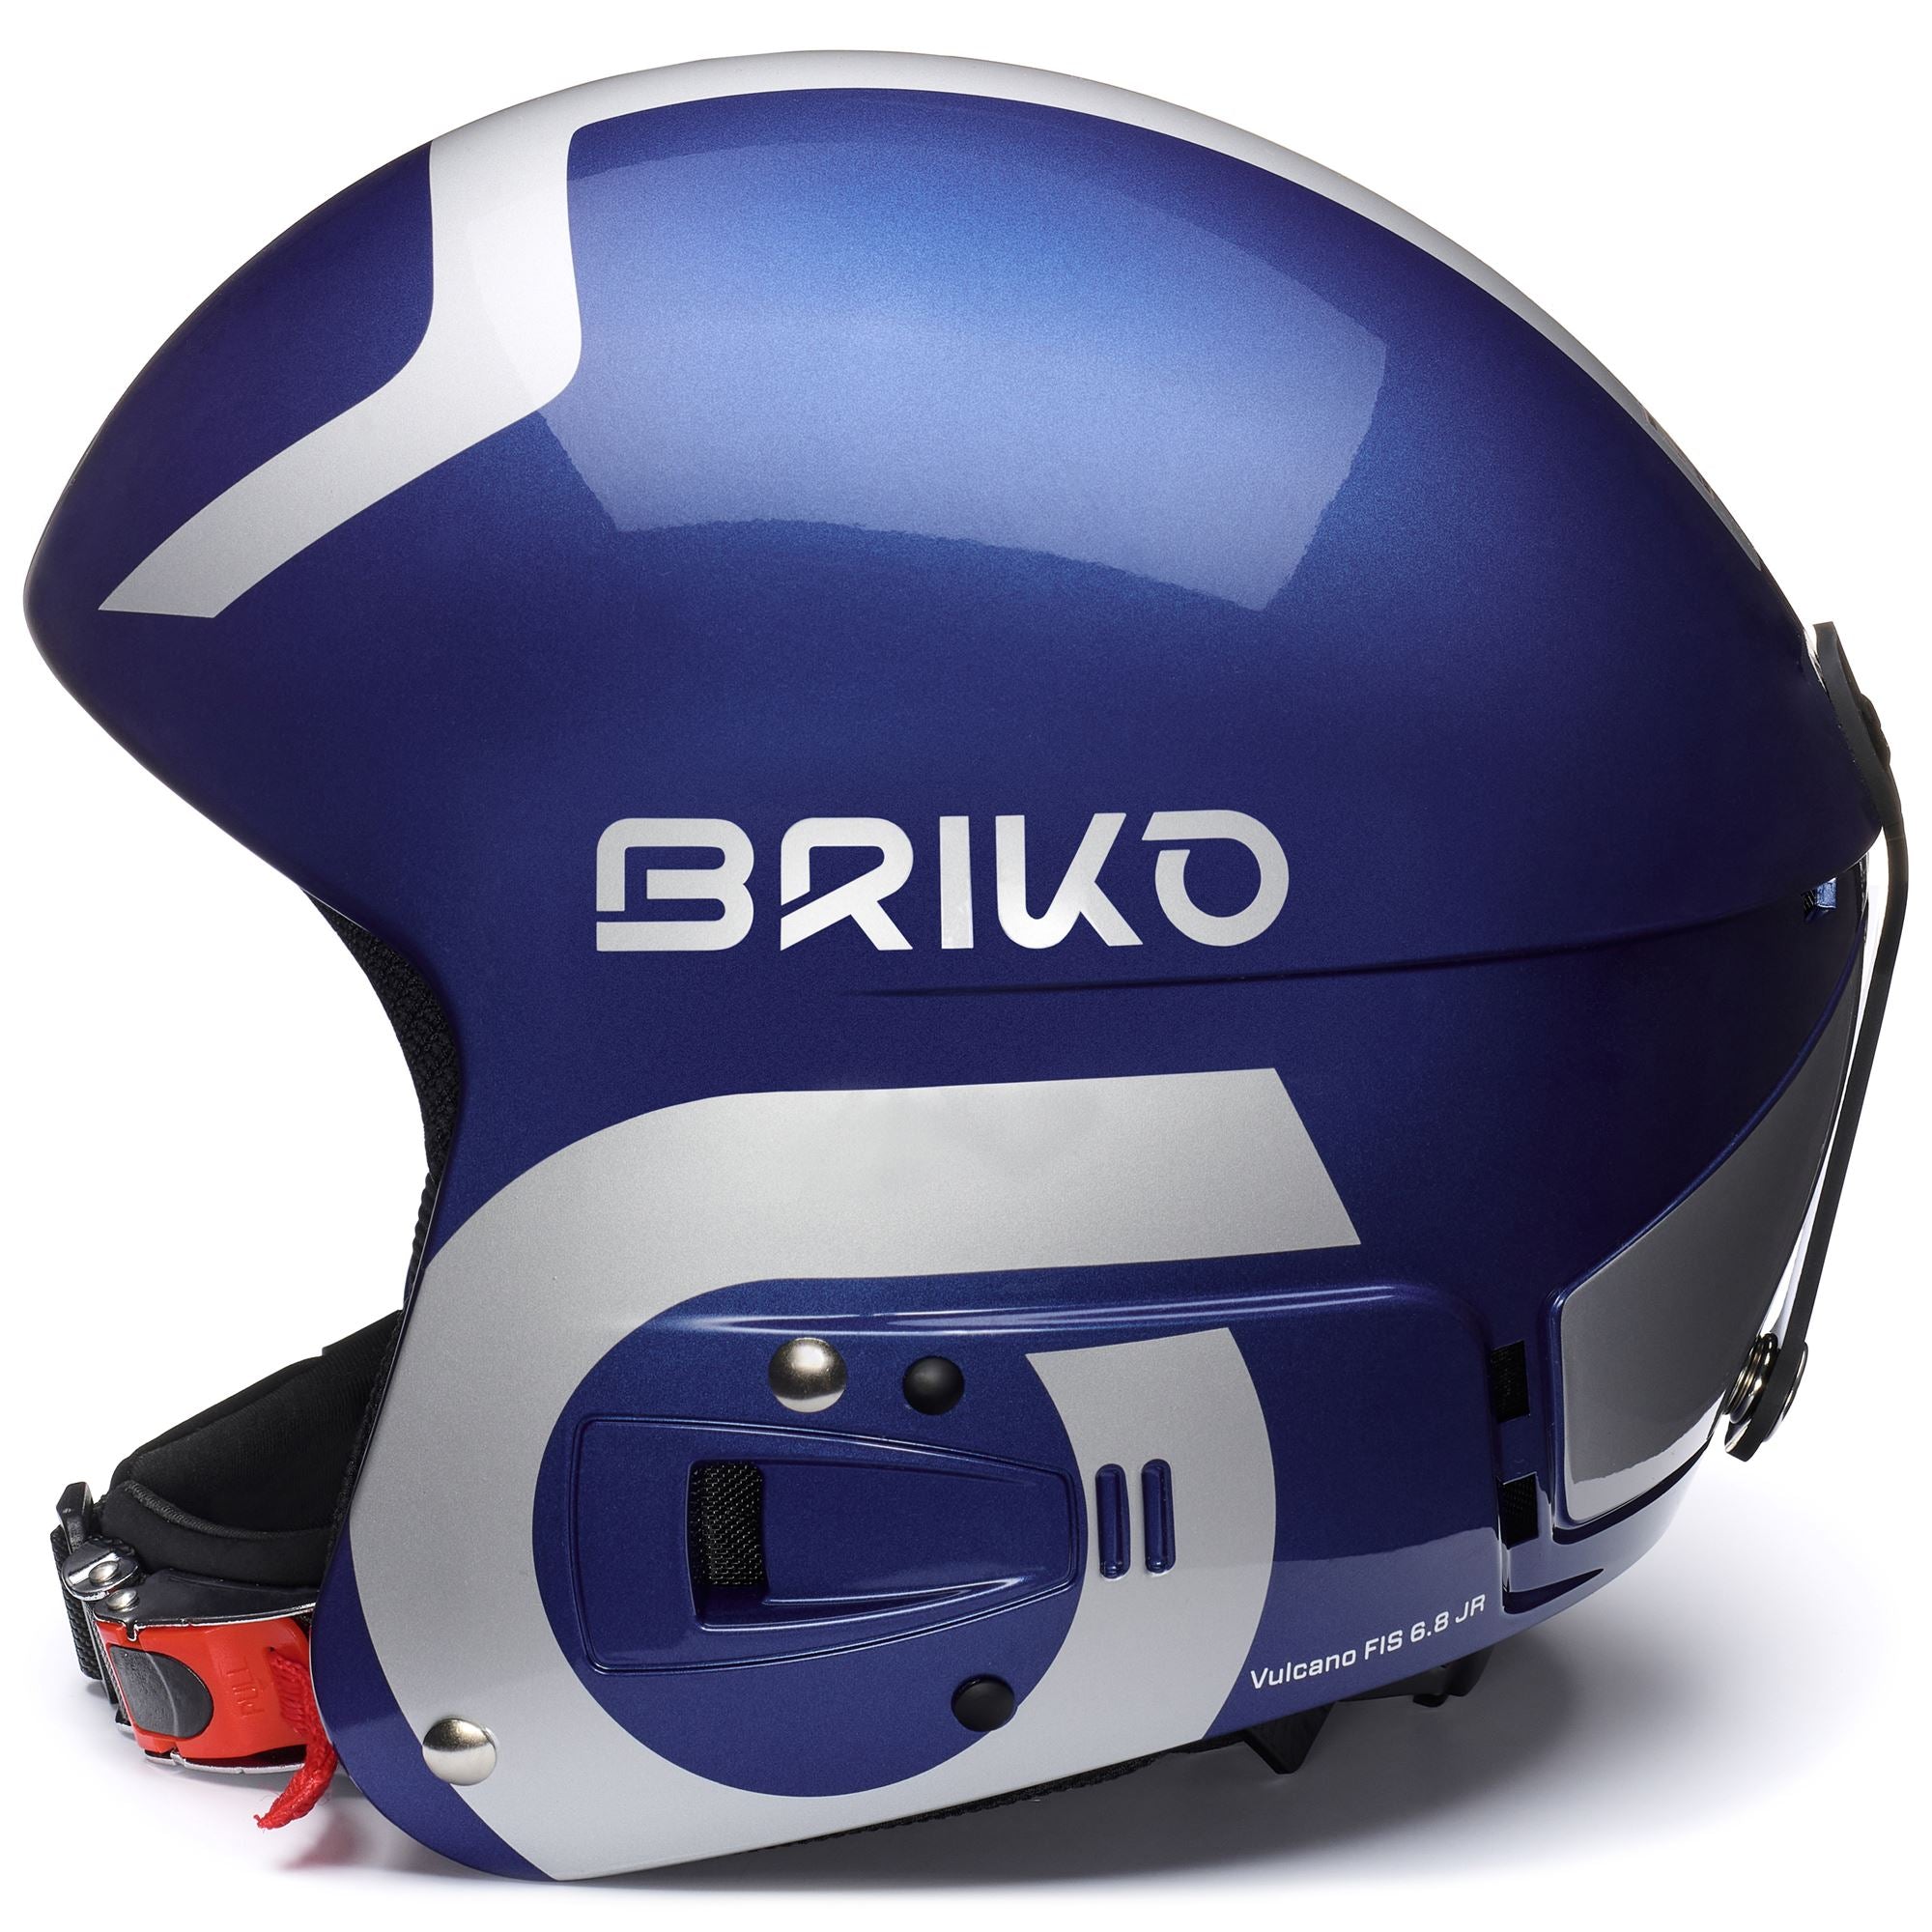 Helmets Kid unisex VULCANO FIS 6.8 JR Helmet SHINY METALLIC BLUE 